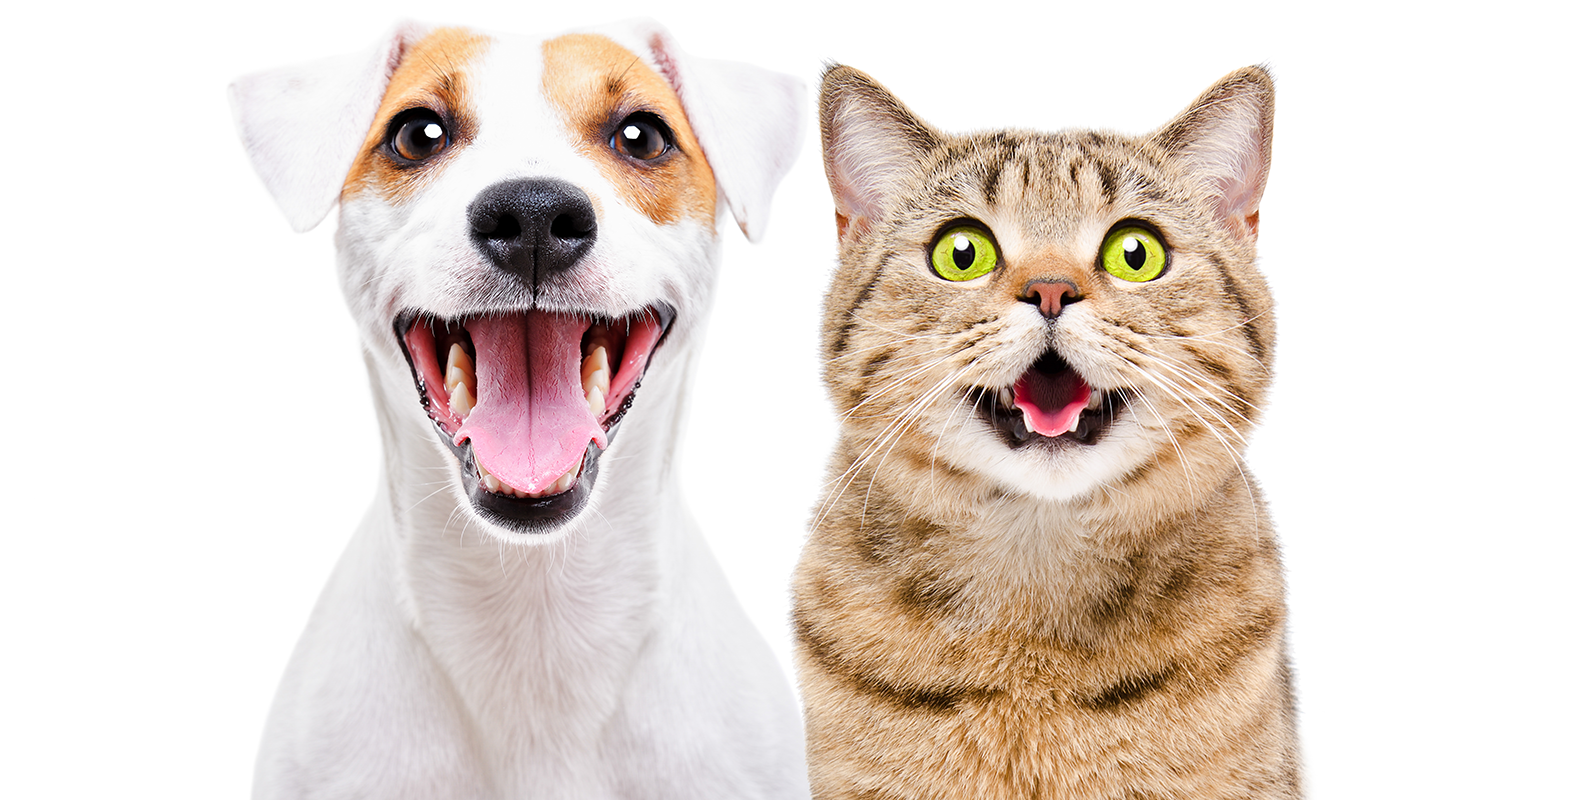 Pet food, cat litter bright spots in 